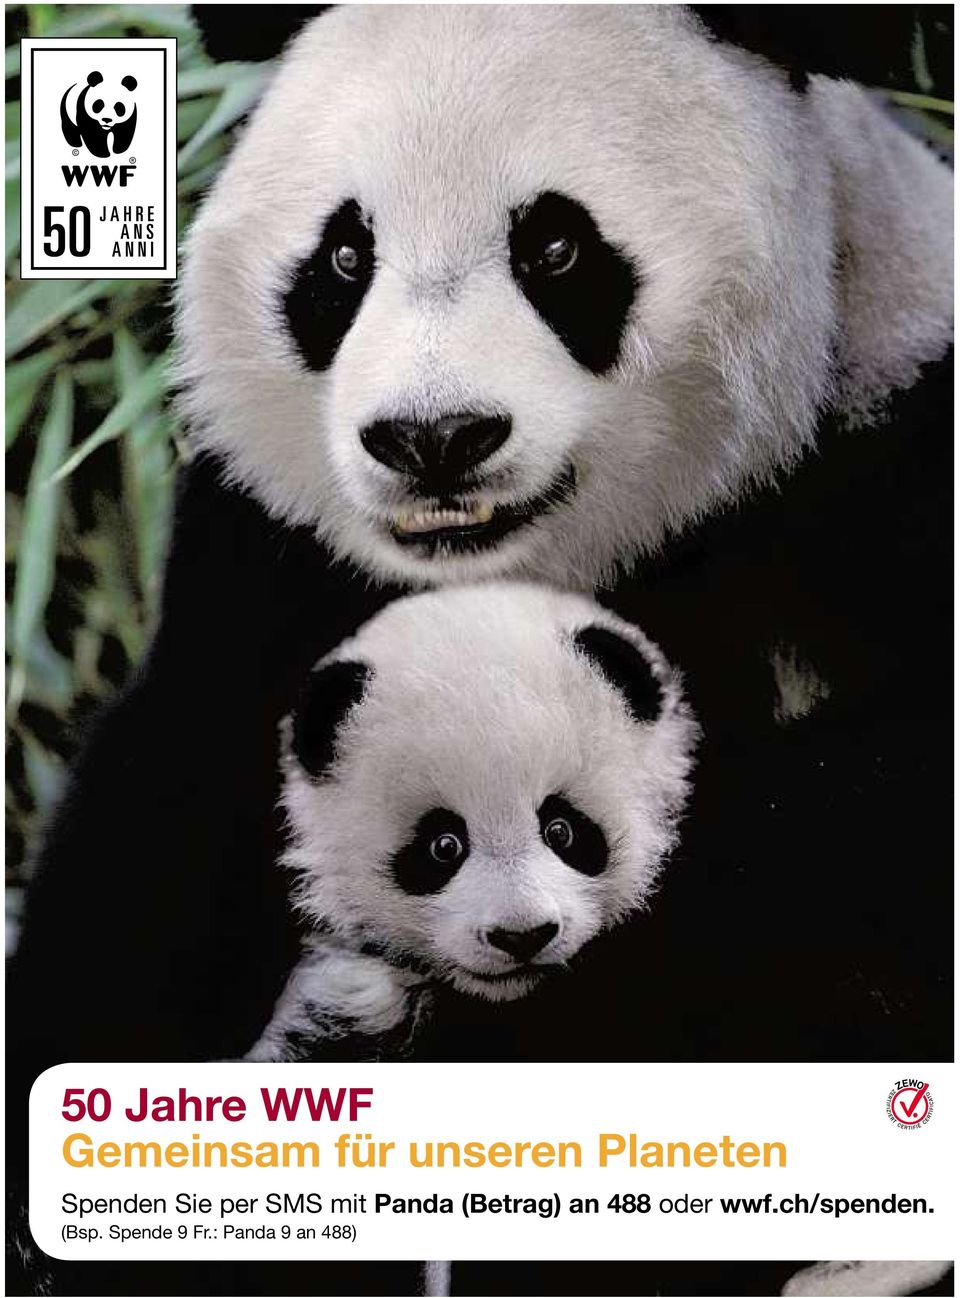 Panda (Betrag) an 488 oder wwf.